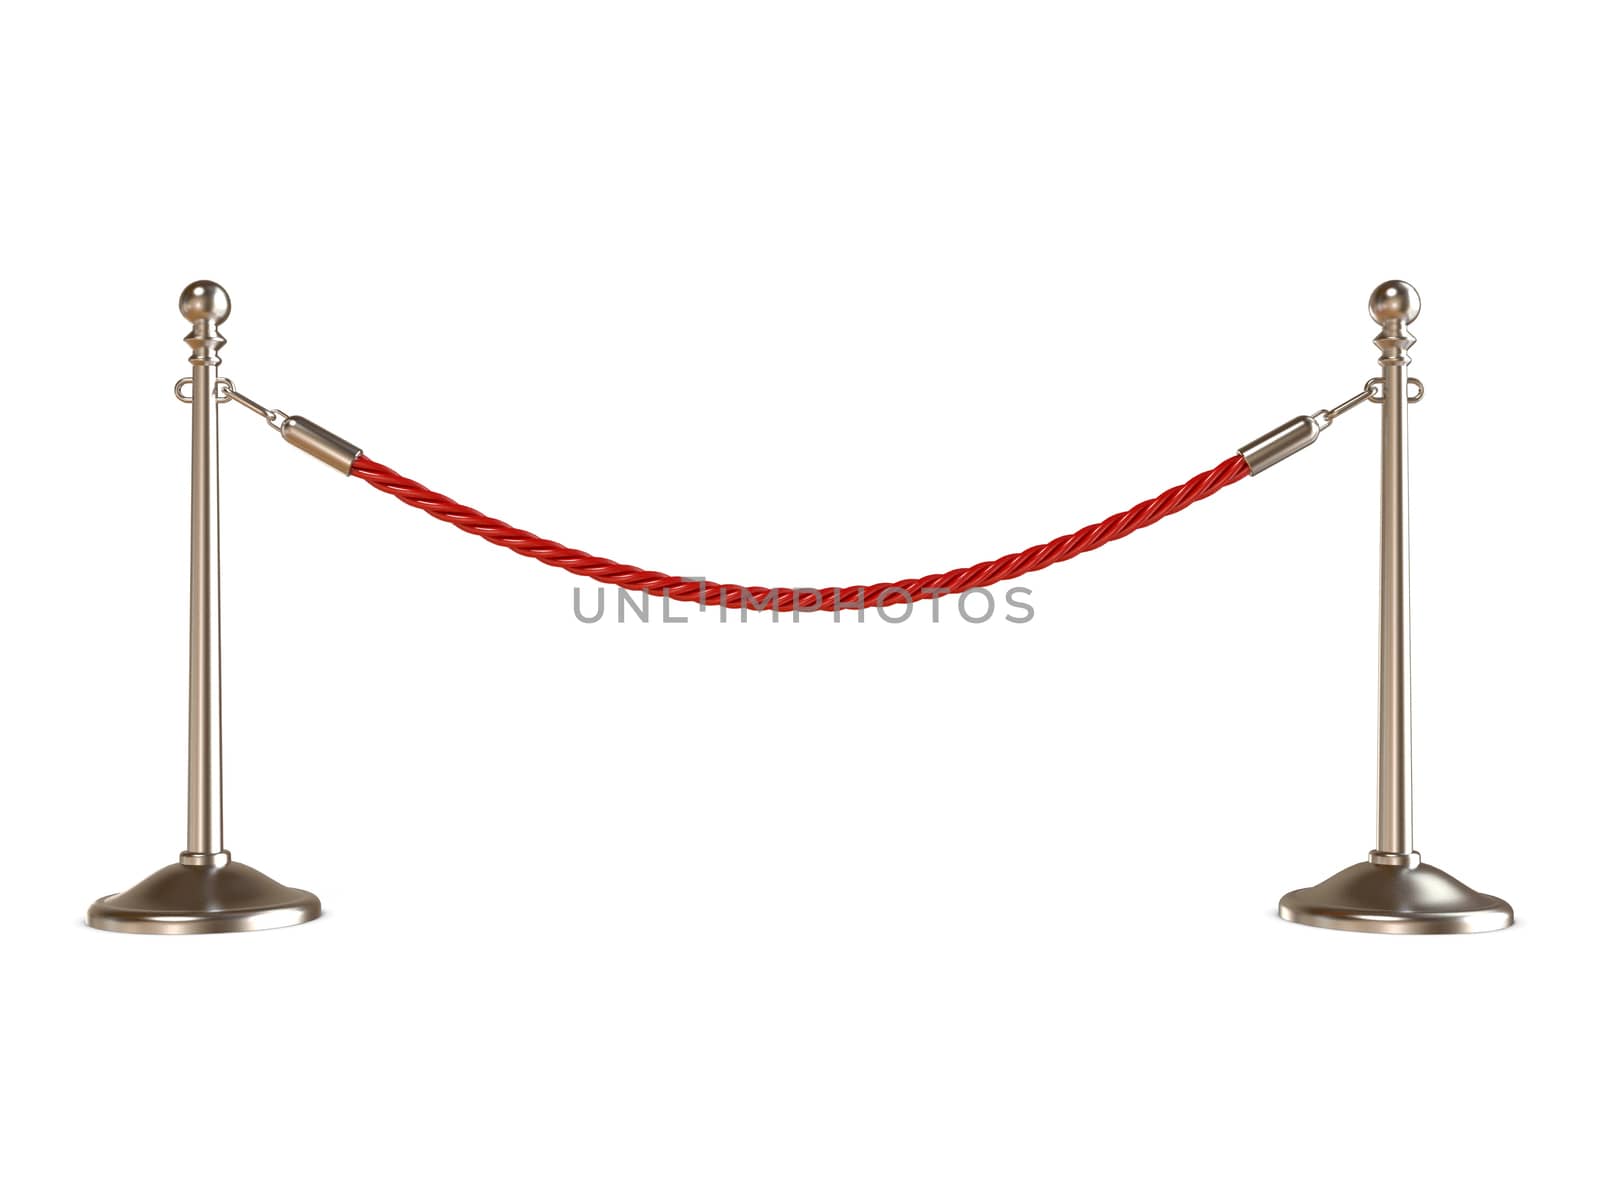 Barrier rope on white. 3D render illustration isolated on white background